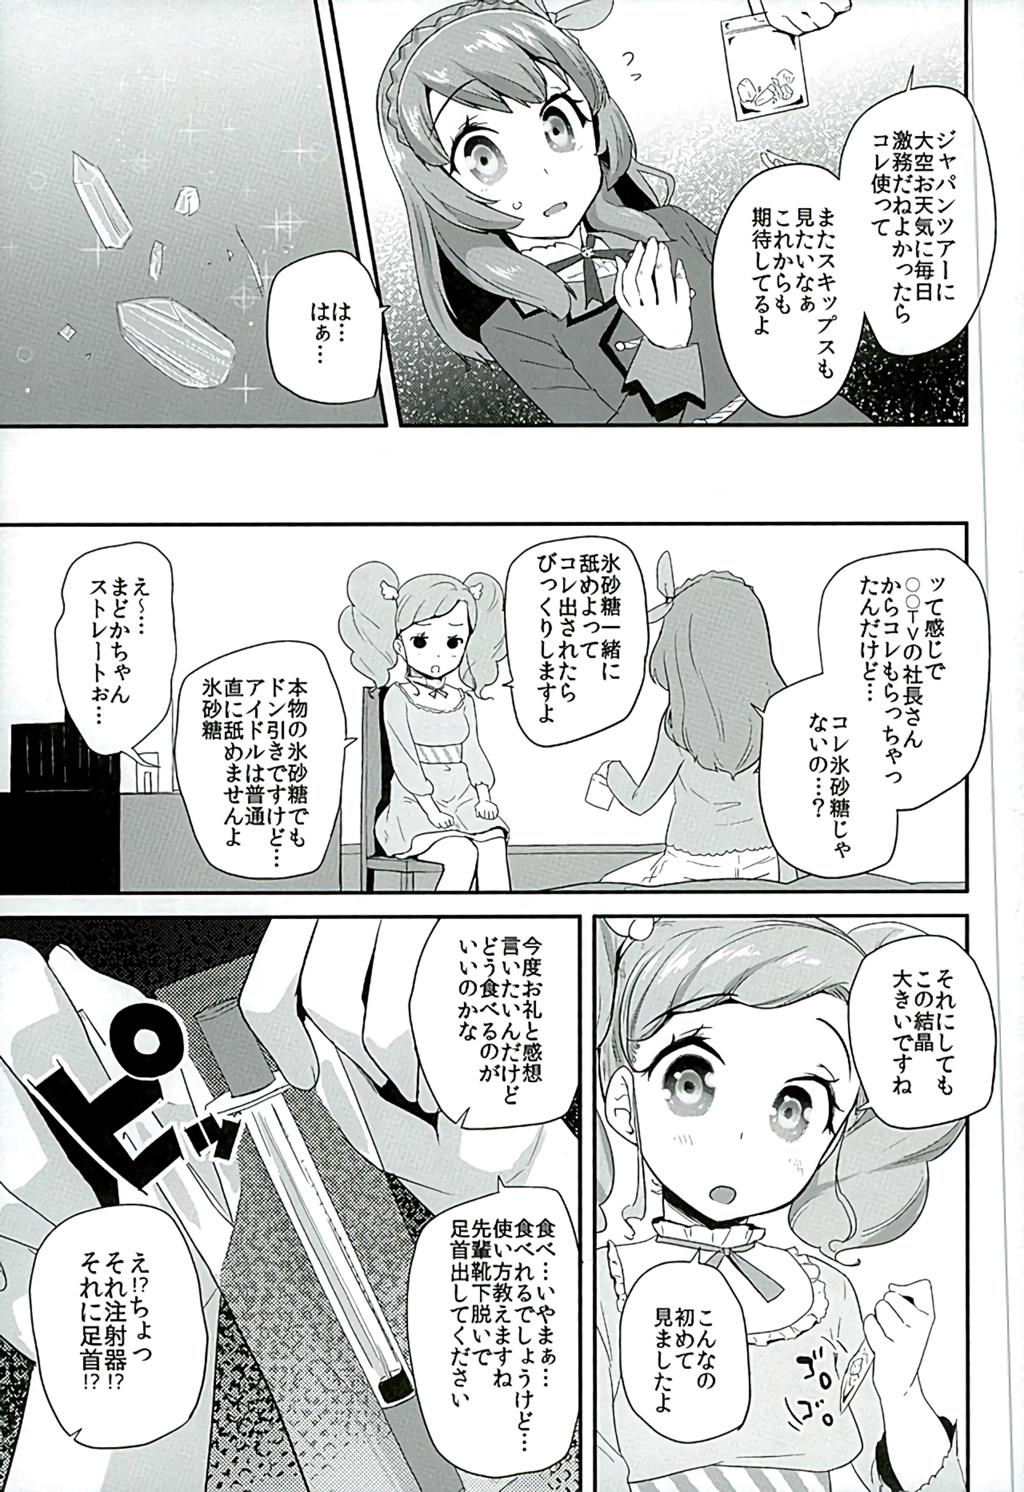 Long Tri Tri Trips! - Aikatsu Deflowered - Page 4